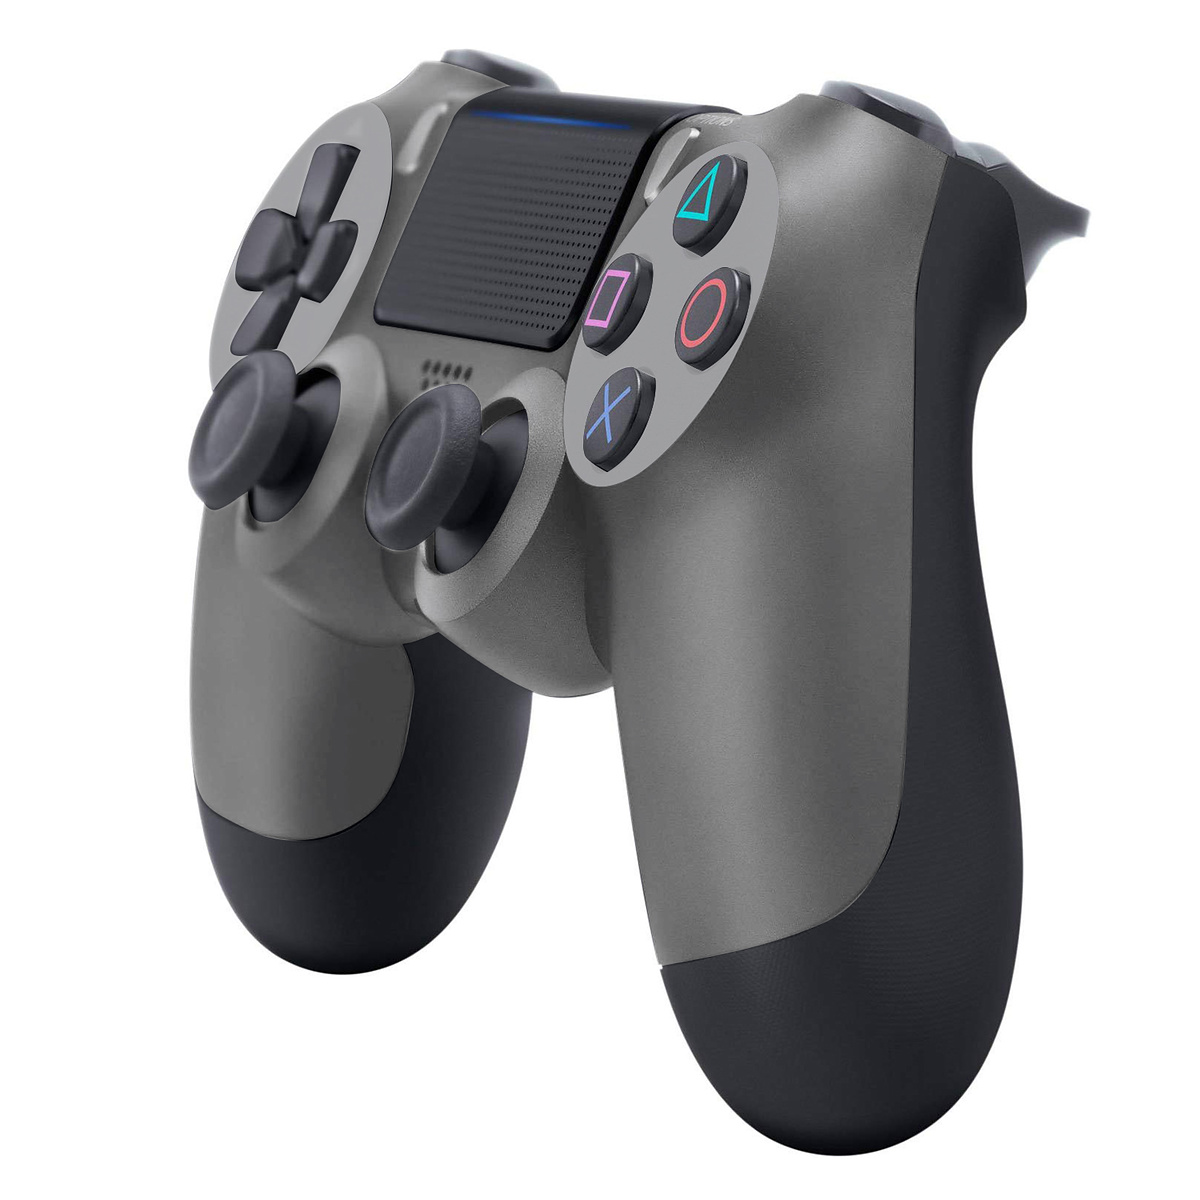 PS4 trådlös handkontroll, metall svart